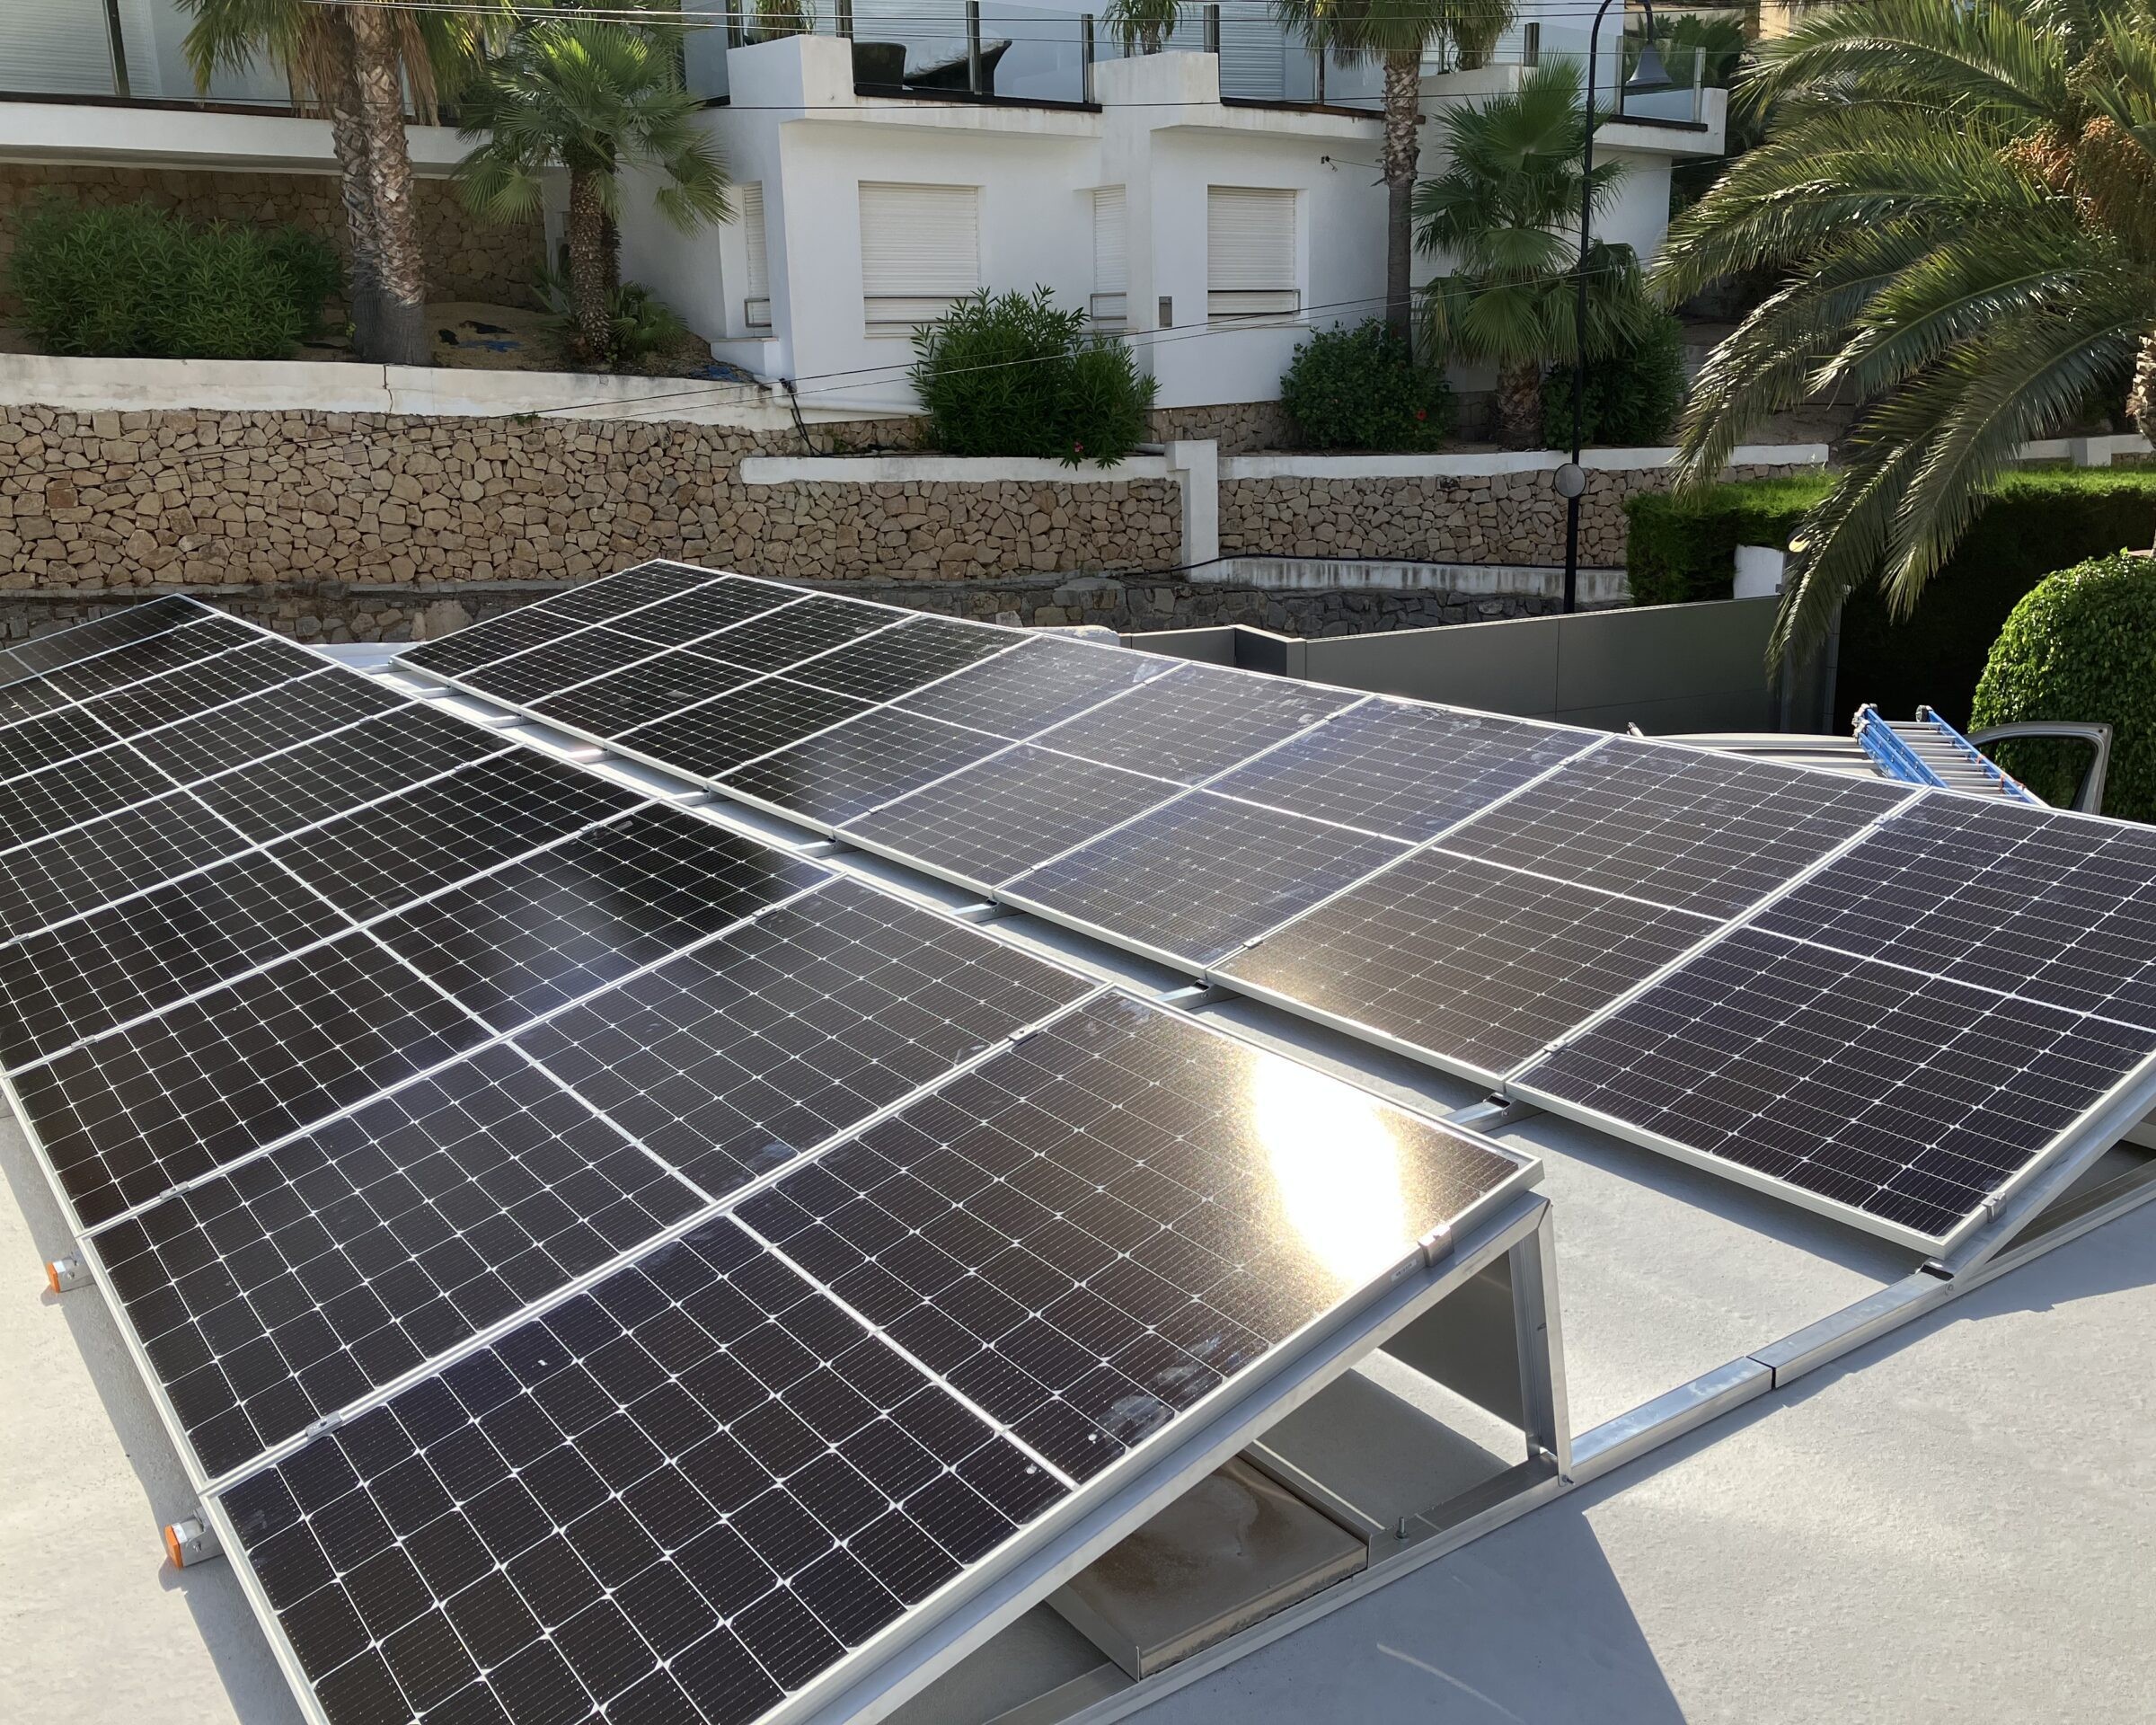 18x 385 wp JA Solar Panels, Altea, Alicante (Hybrid system)